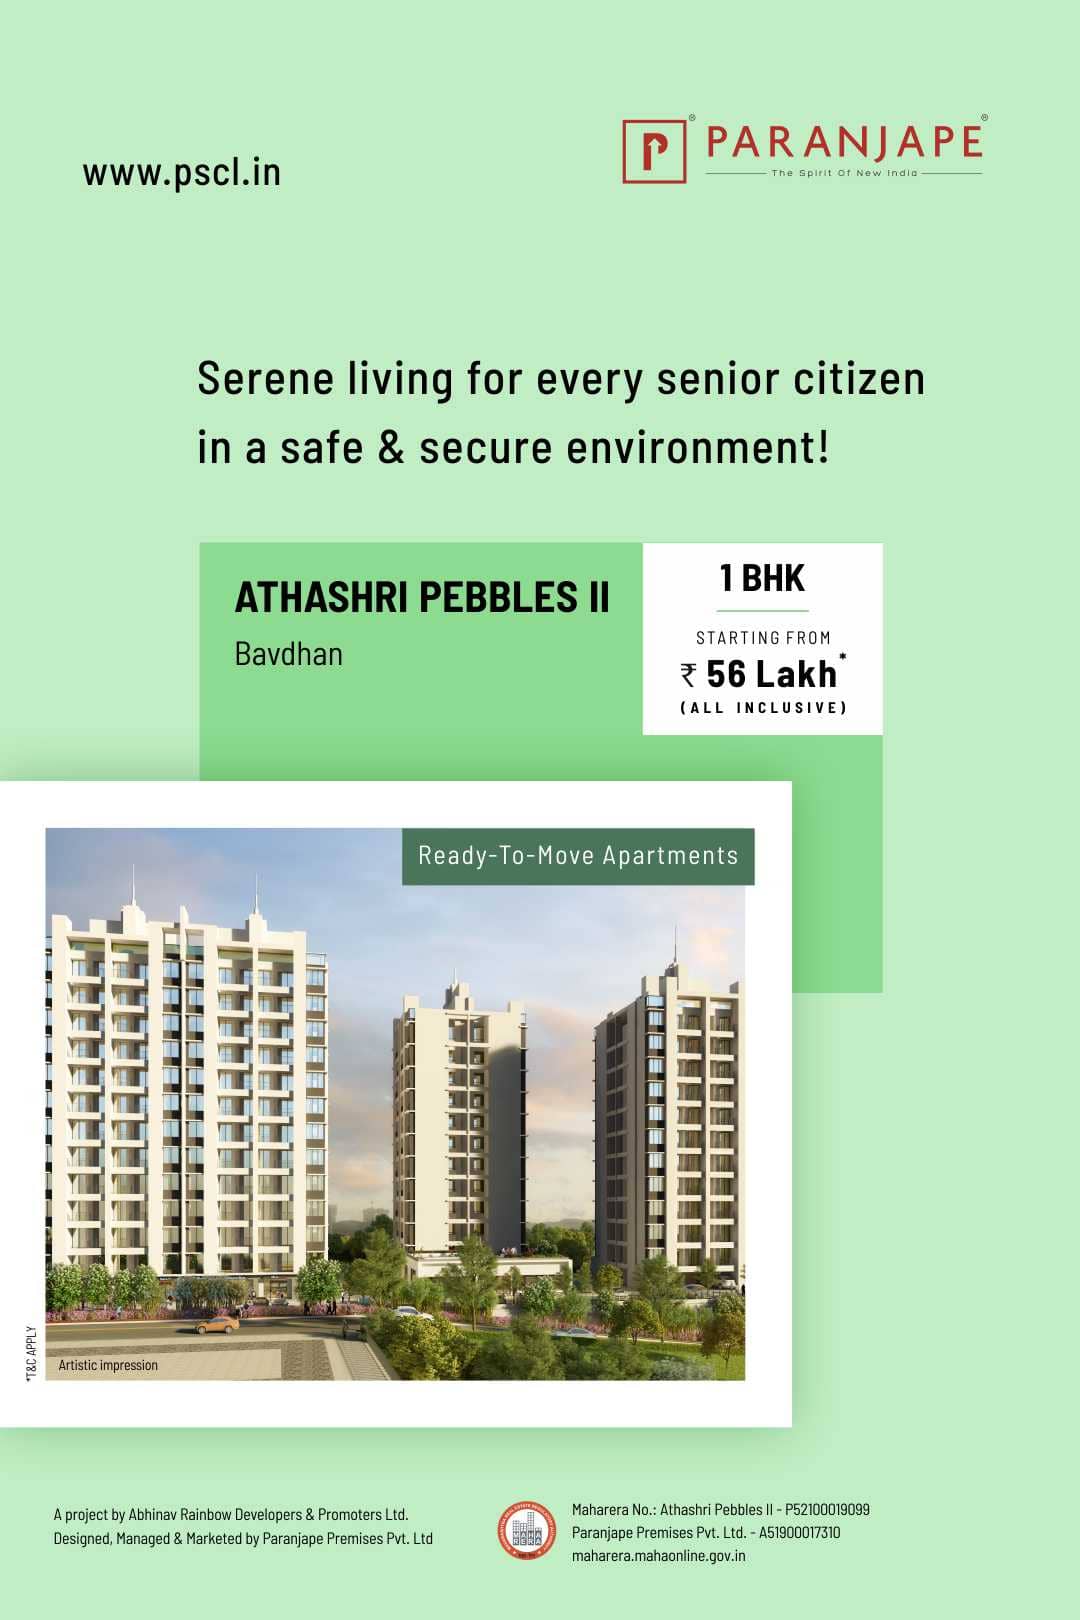 Senior Citizen Housing Projects in Pune | Paranjape